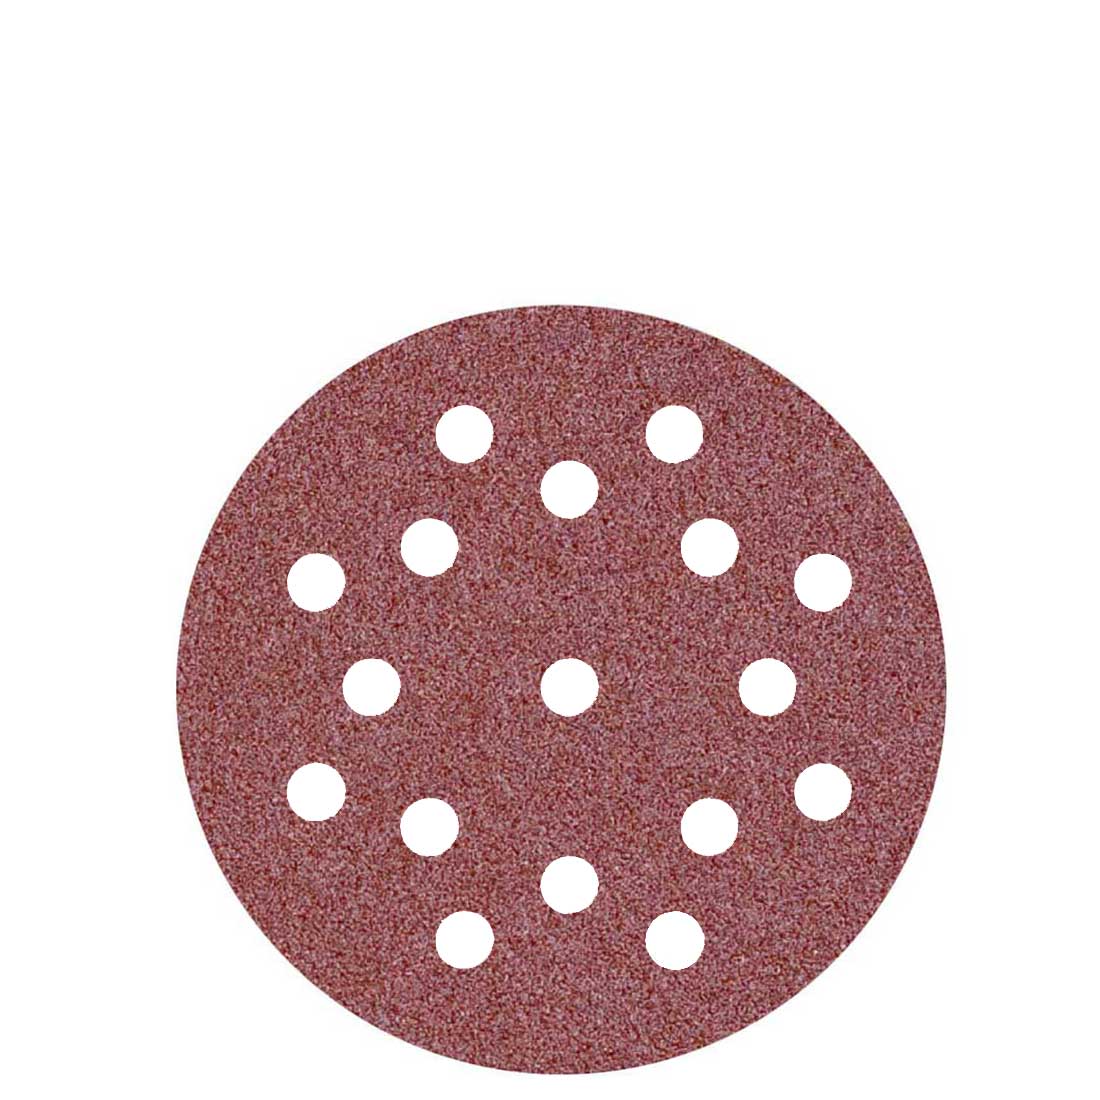 MioTools hook & loop sanding discs for random orbital sanders, G24–240, Ø 125 mm / 17 hole / aluminium oxide